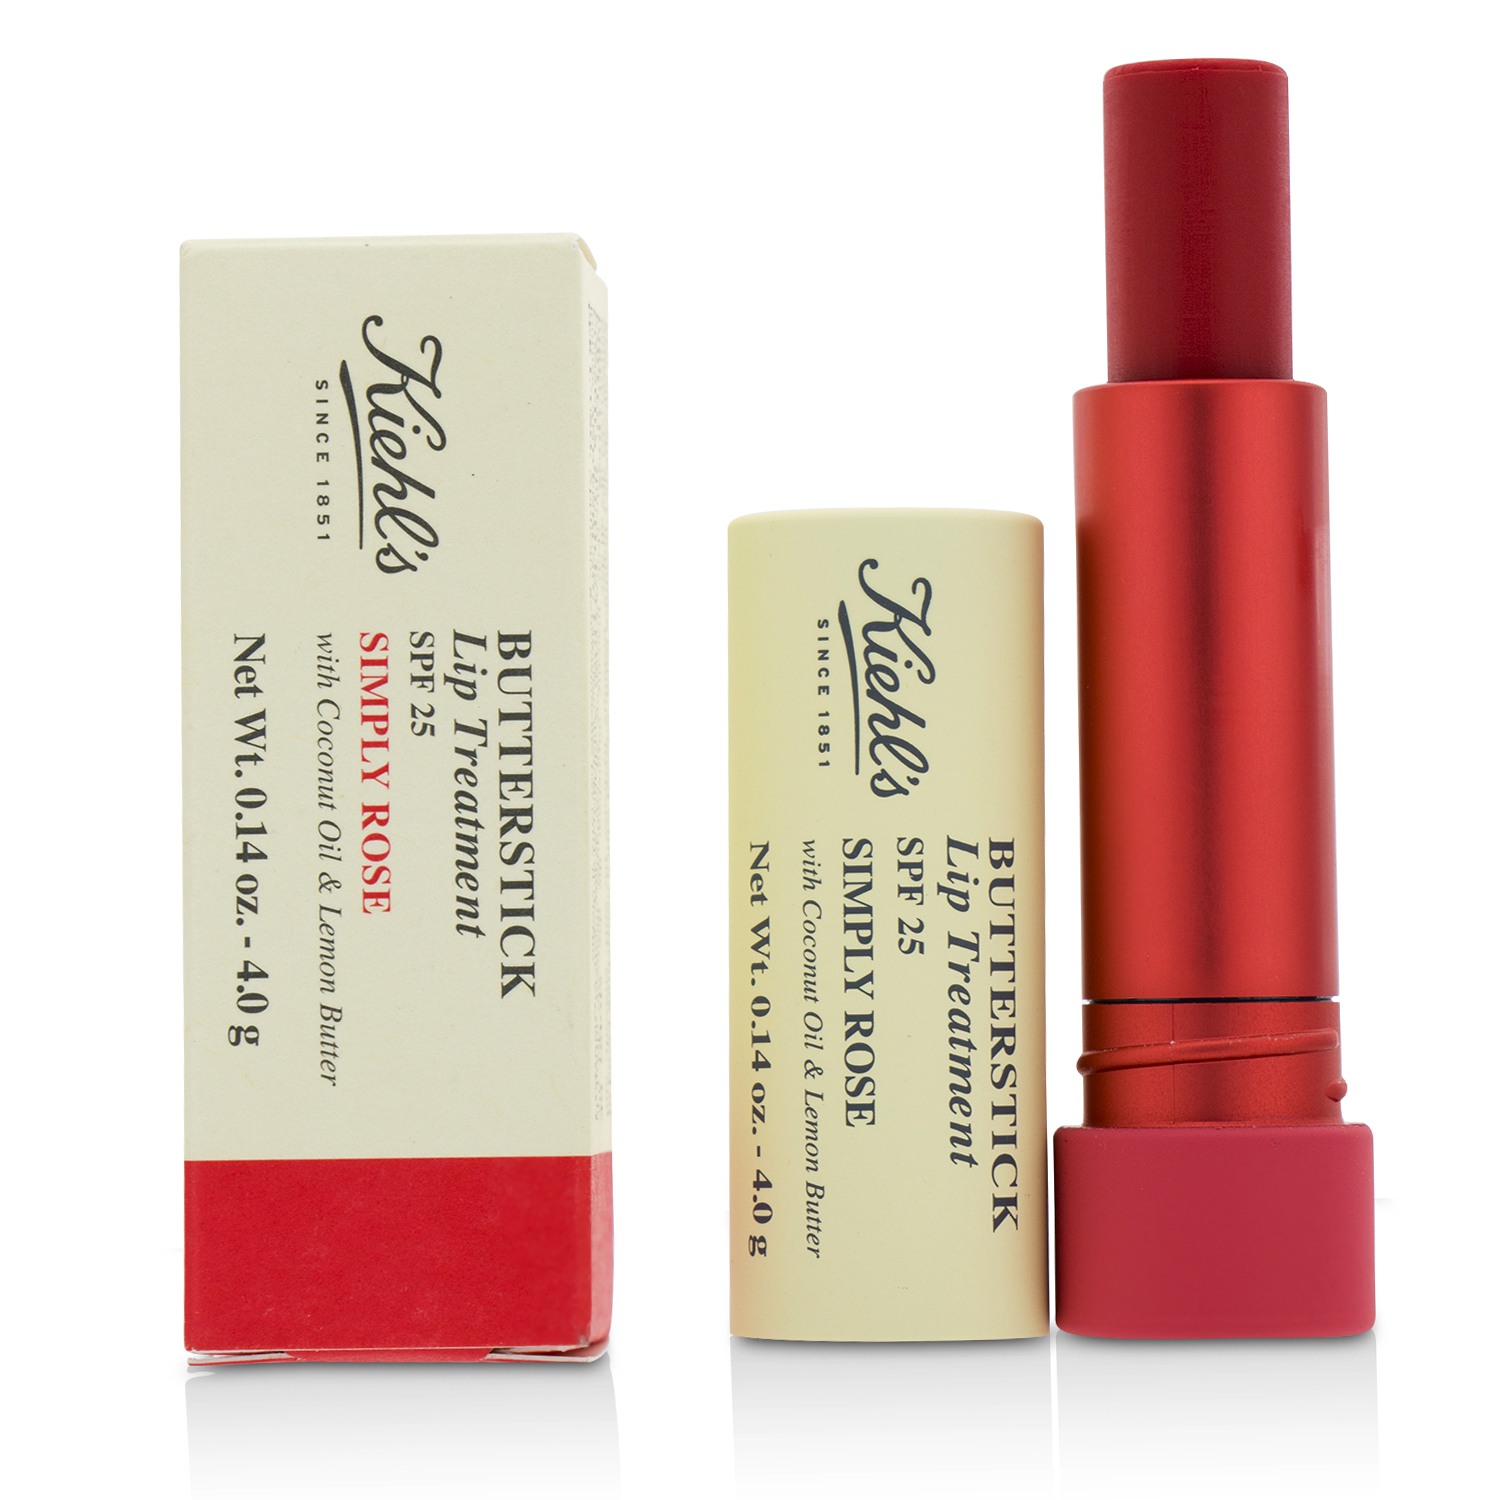 Butterstick Lip Treatment SPF25 - Simply Rose Kiehls Image